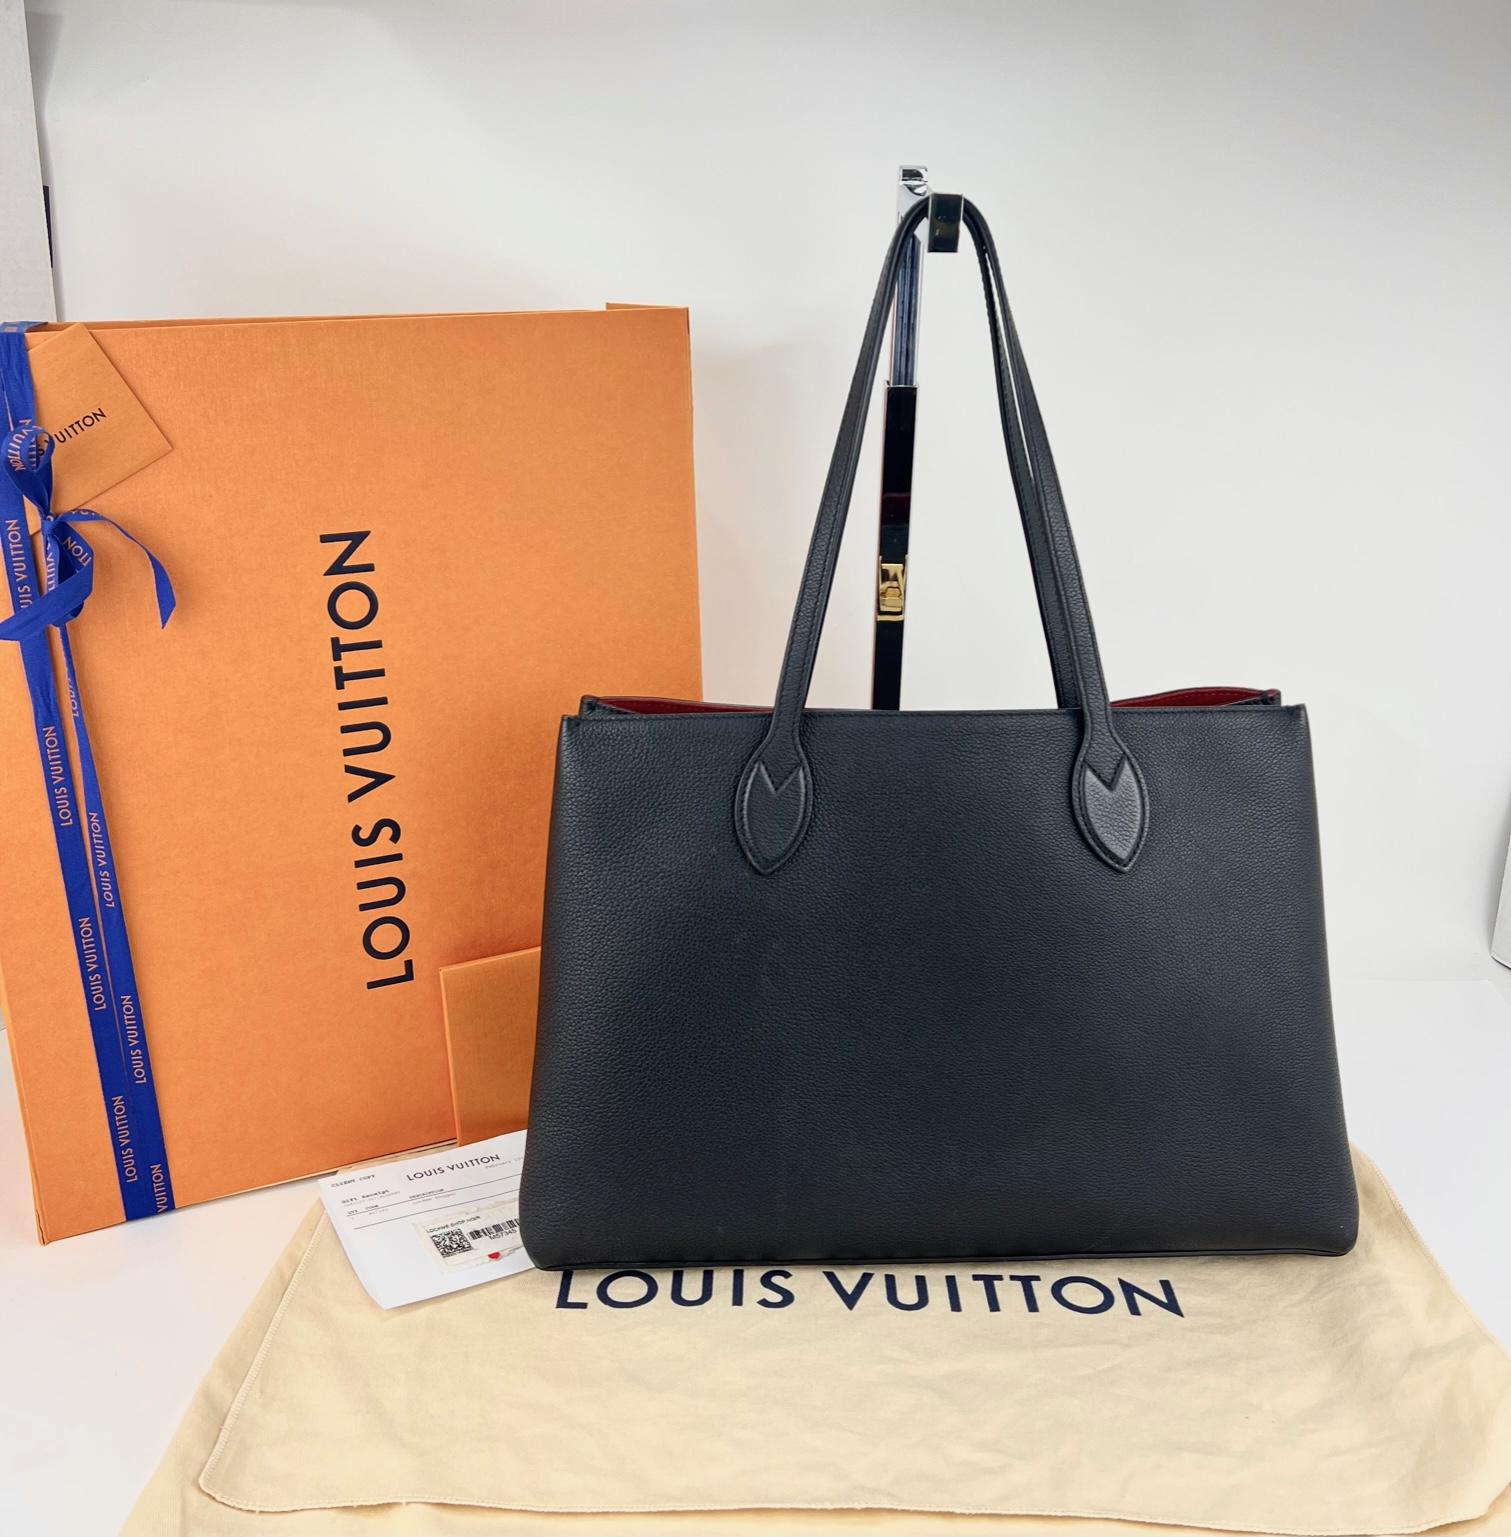 Louis Vuitton - Burgundy Leather Lockme Hobo Bag